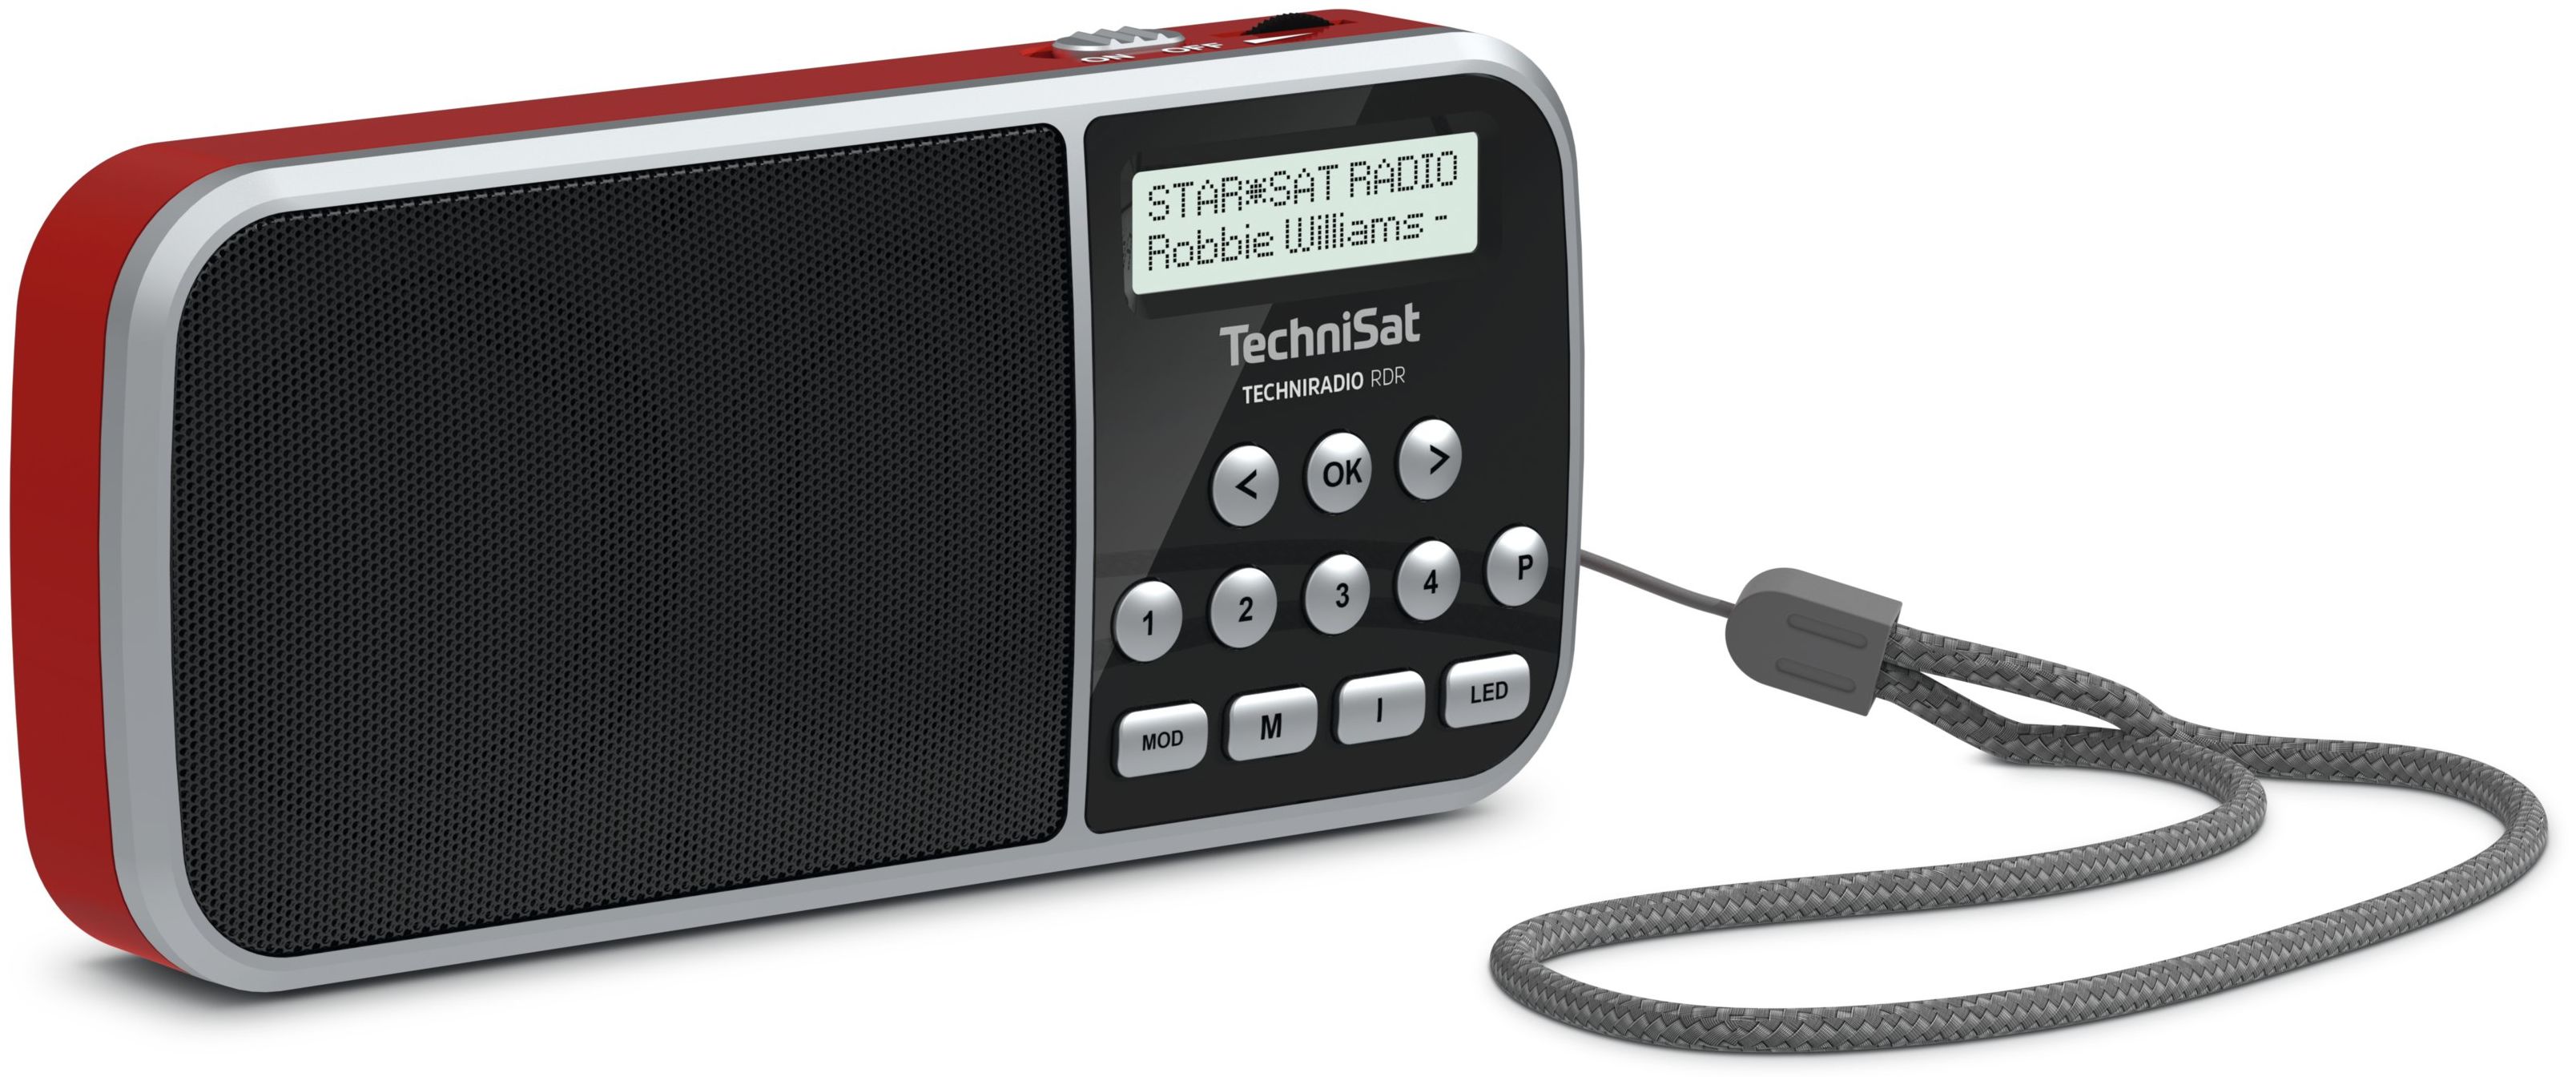 FM TechniRadio Radio Technomarkt Tragbar von DAB+, RDR TechniSat (Rot) expert